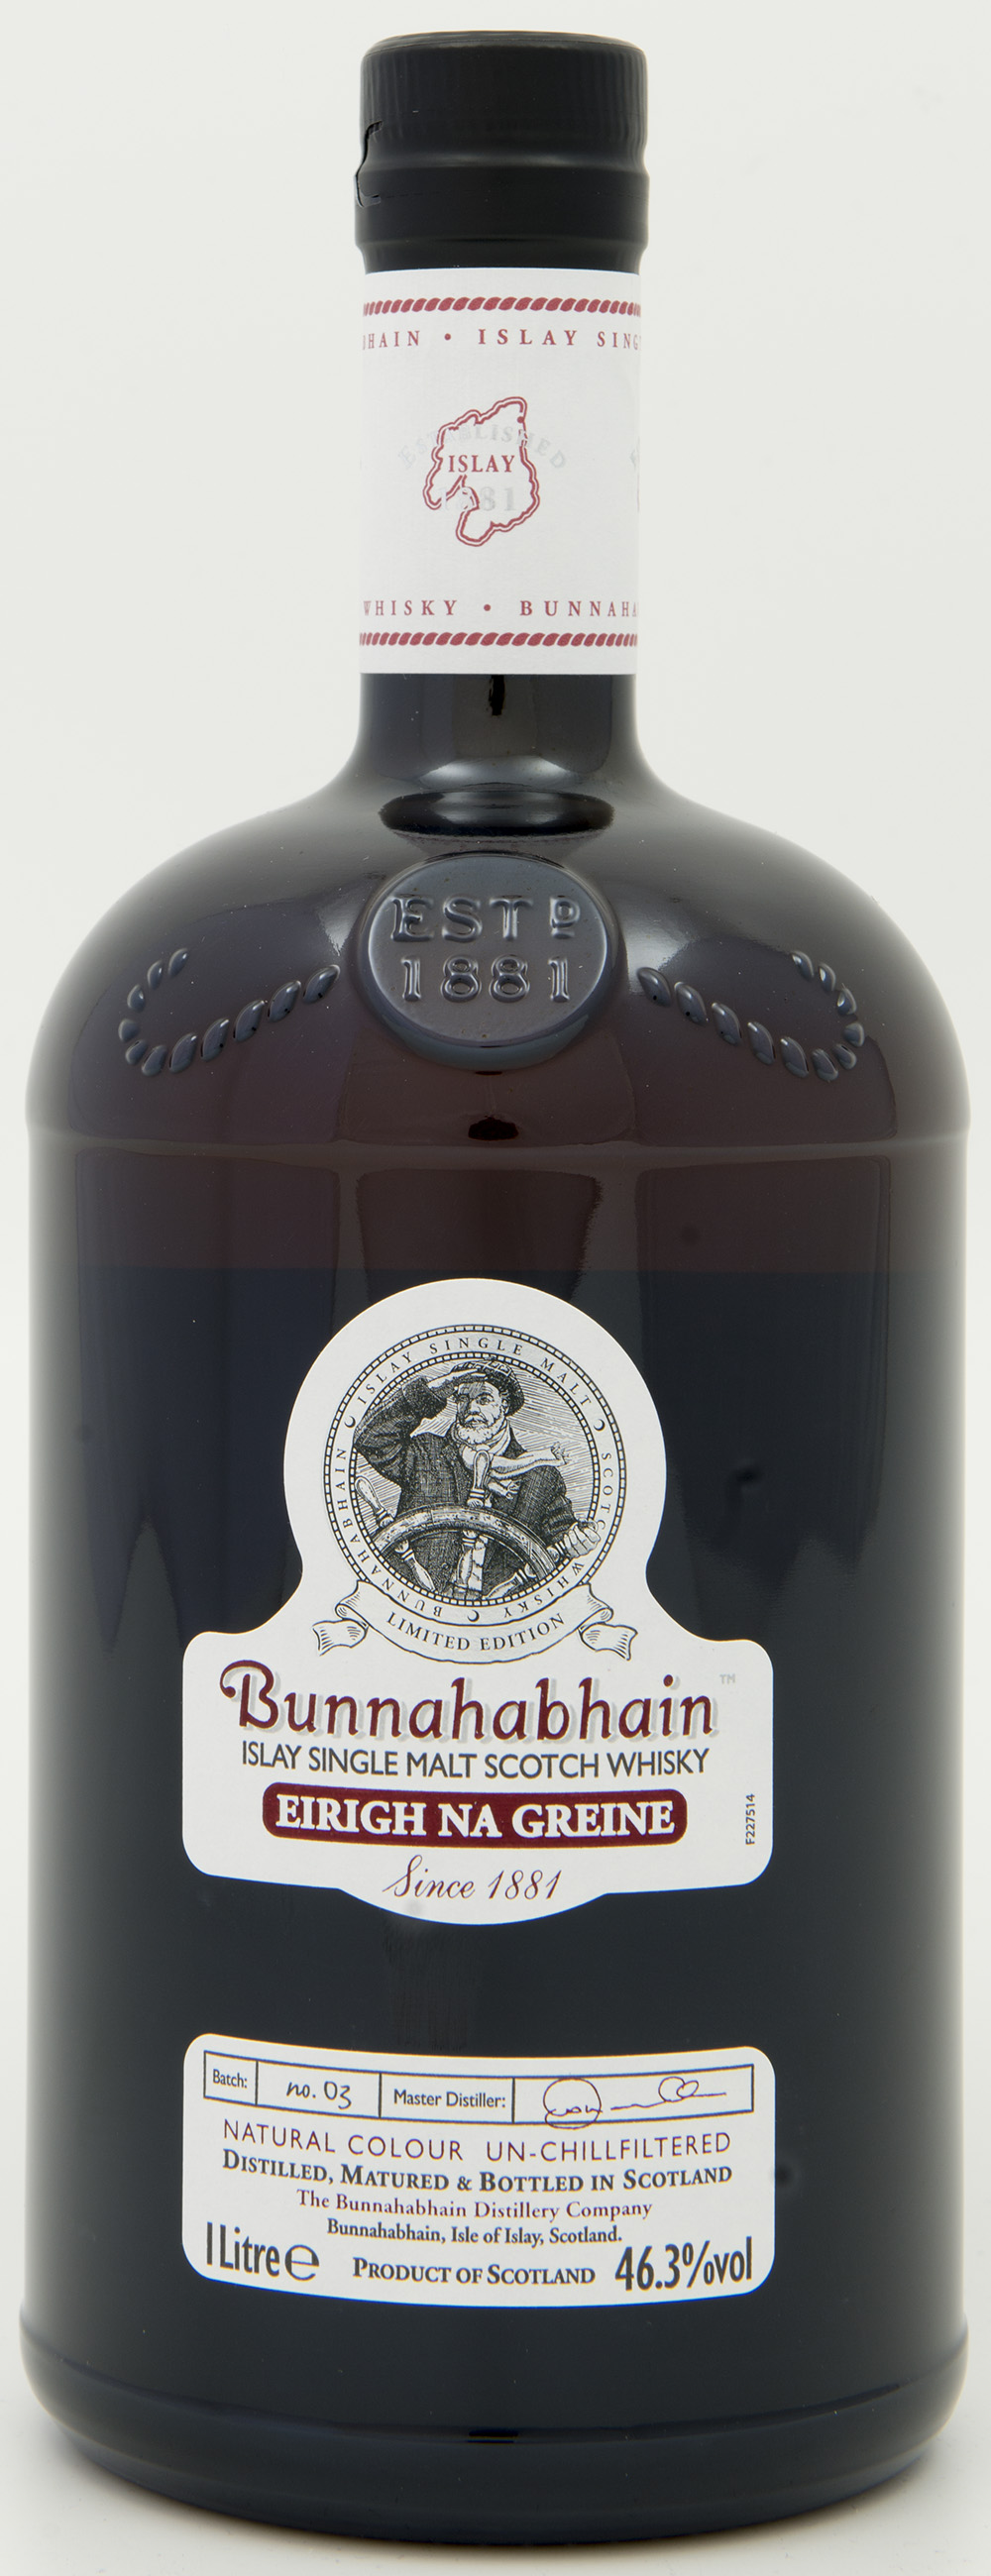 Billede: DSC_8208 - Bunnahabhain - Eirigh Na Greine - bottle front.jpg